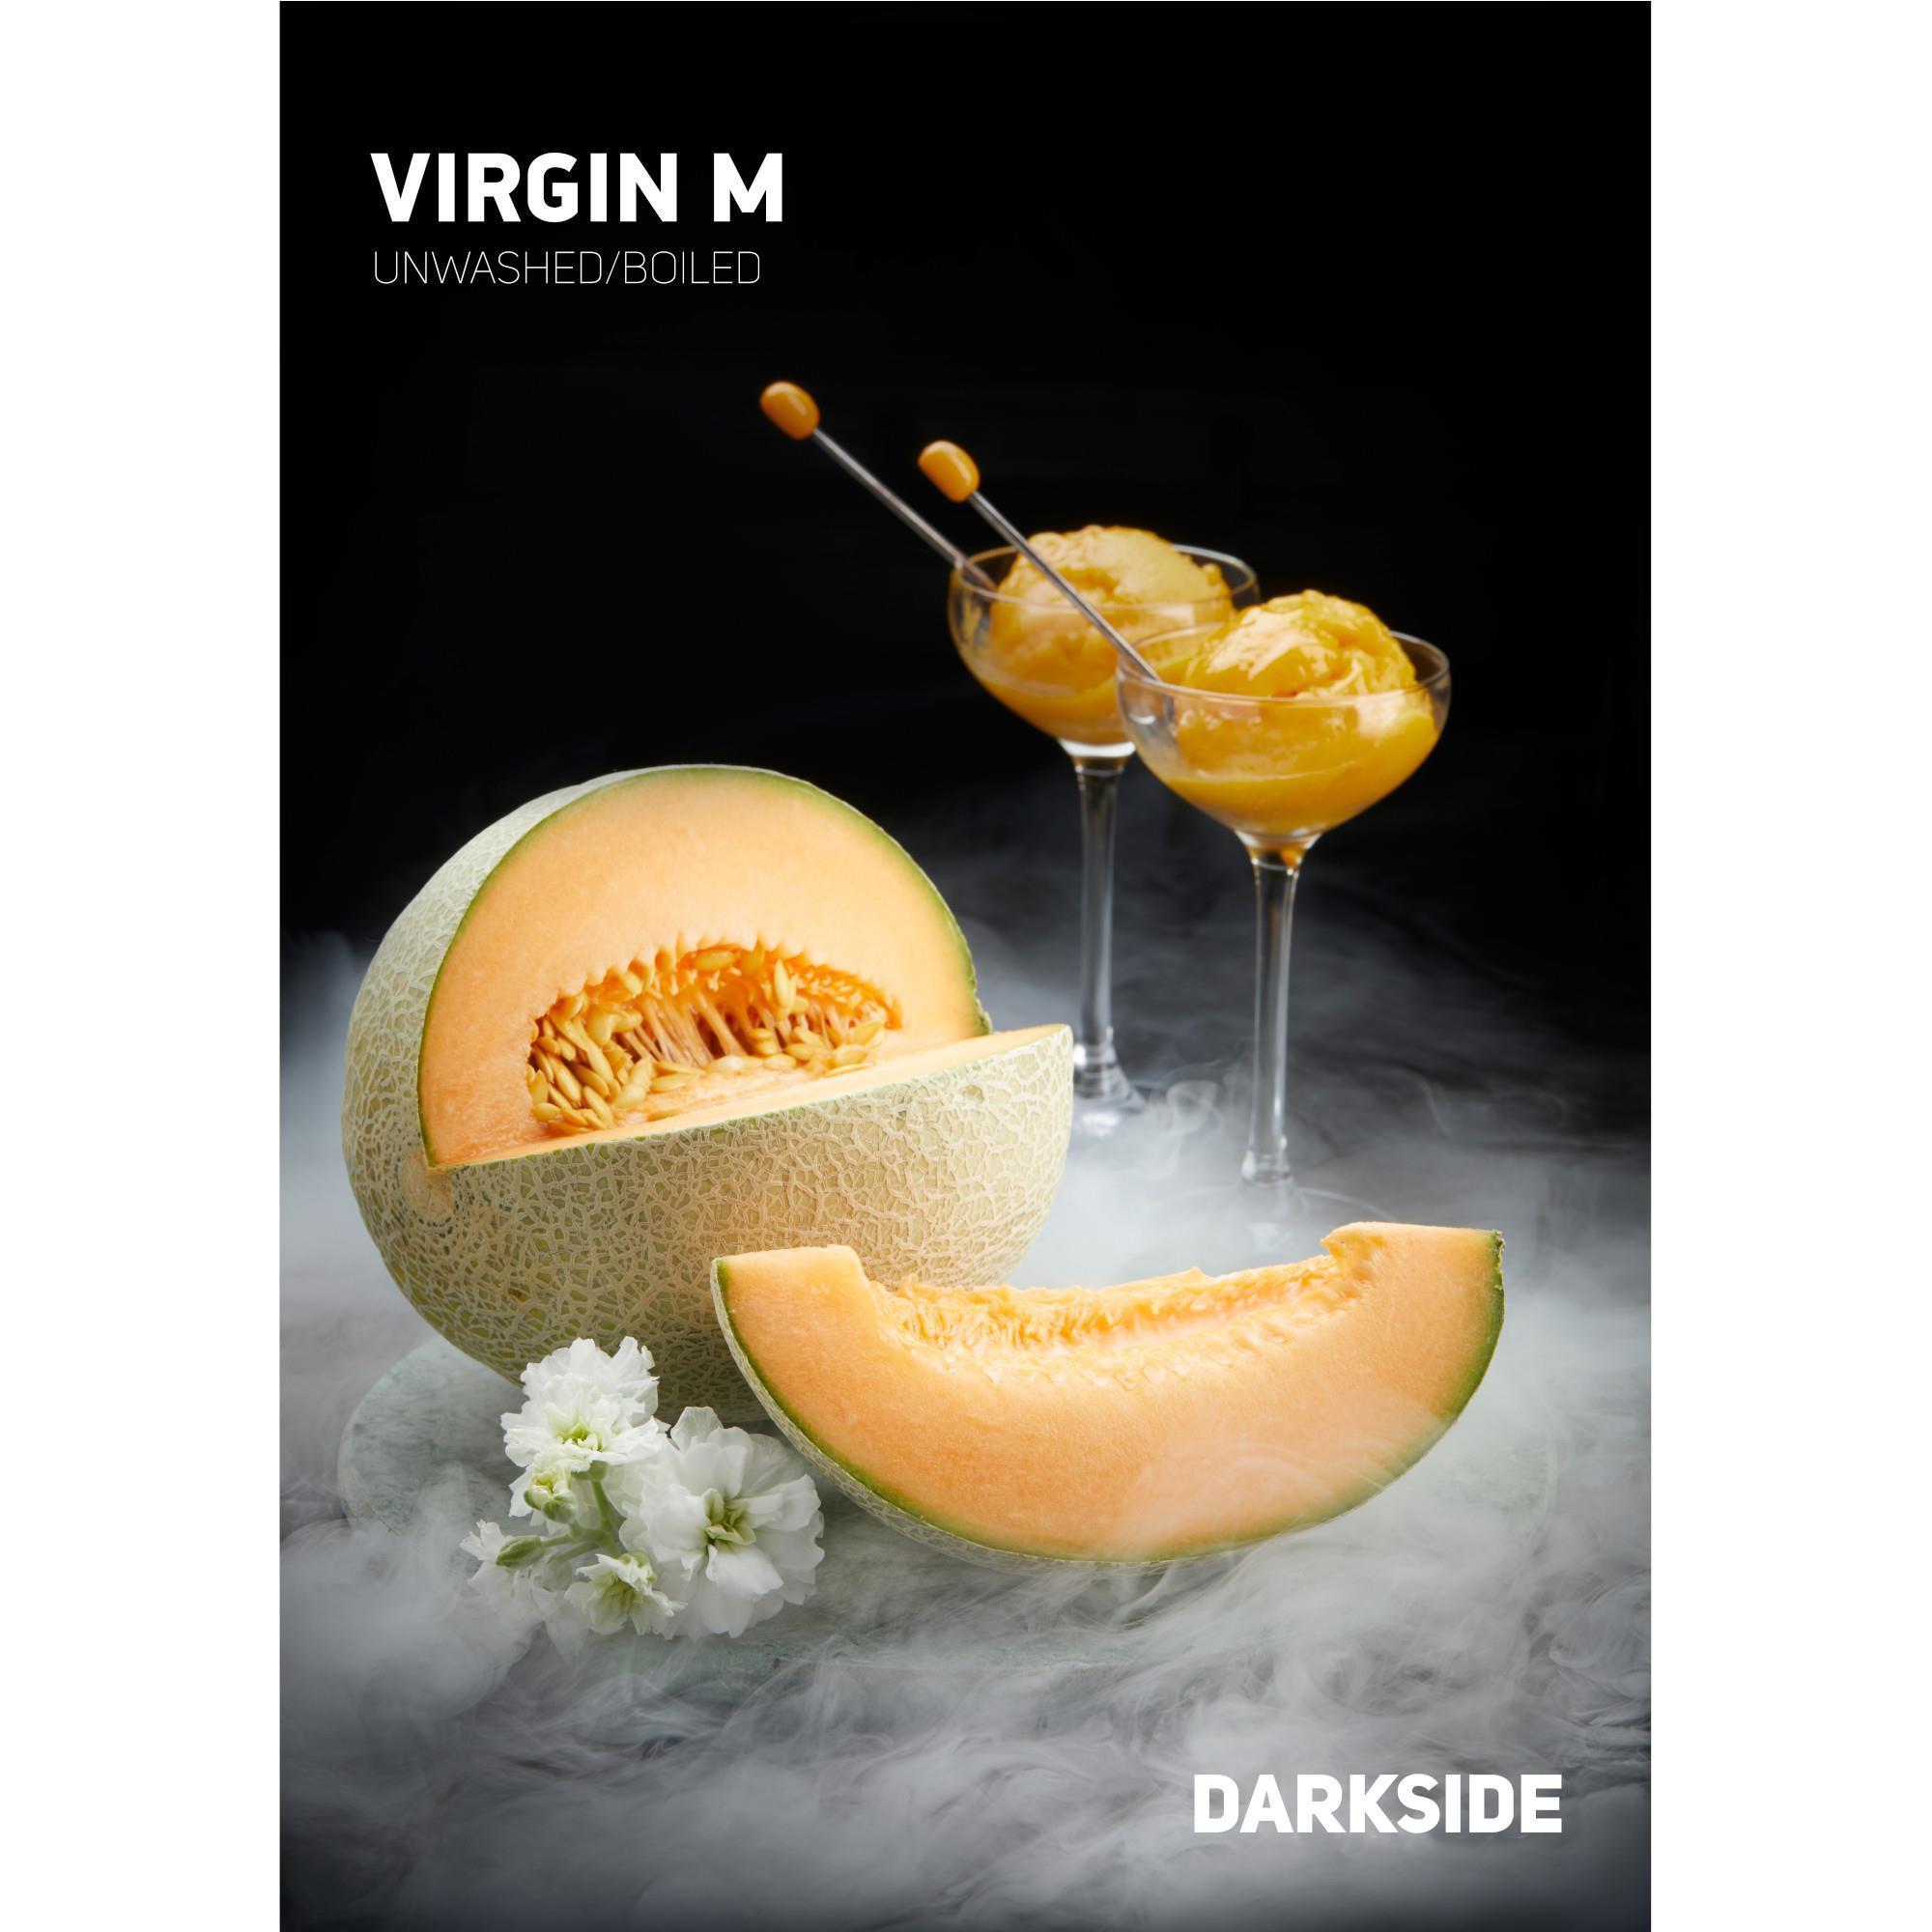 Darkside Base - Virgin M 200g